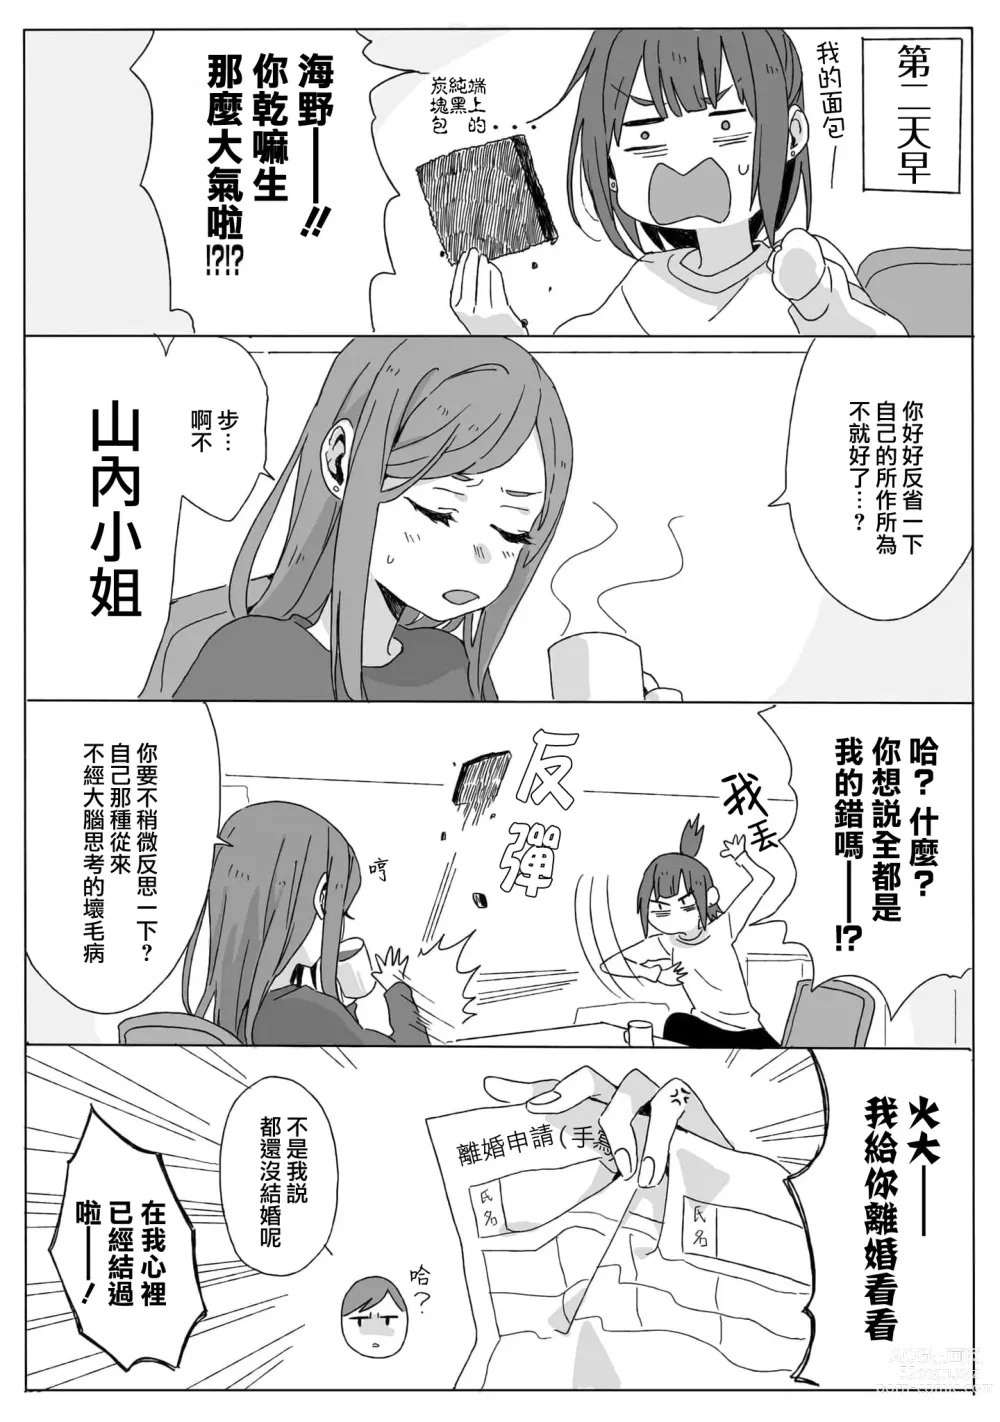 Page 5 of manga 山内小姐和海野小姐的回合。